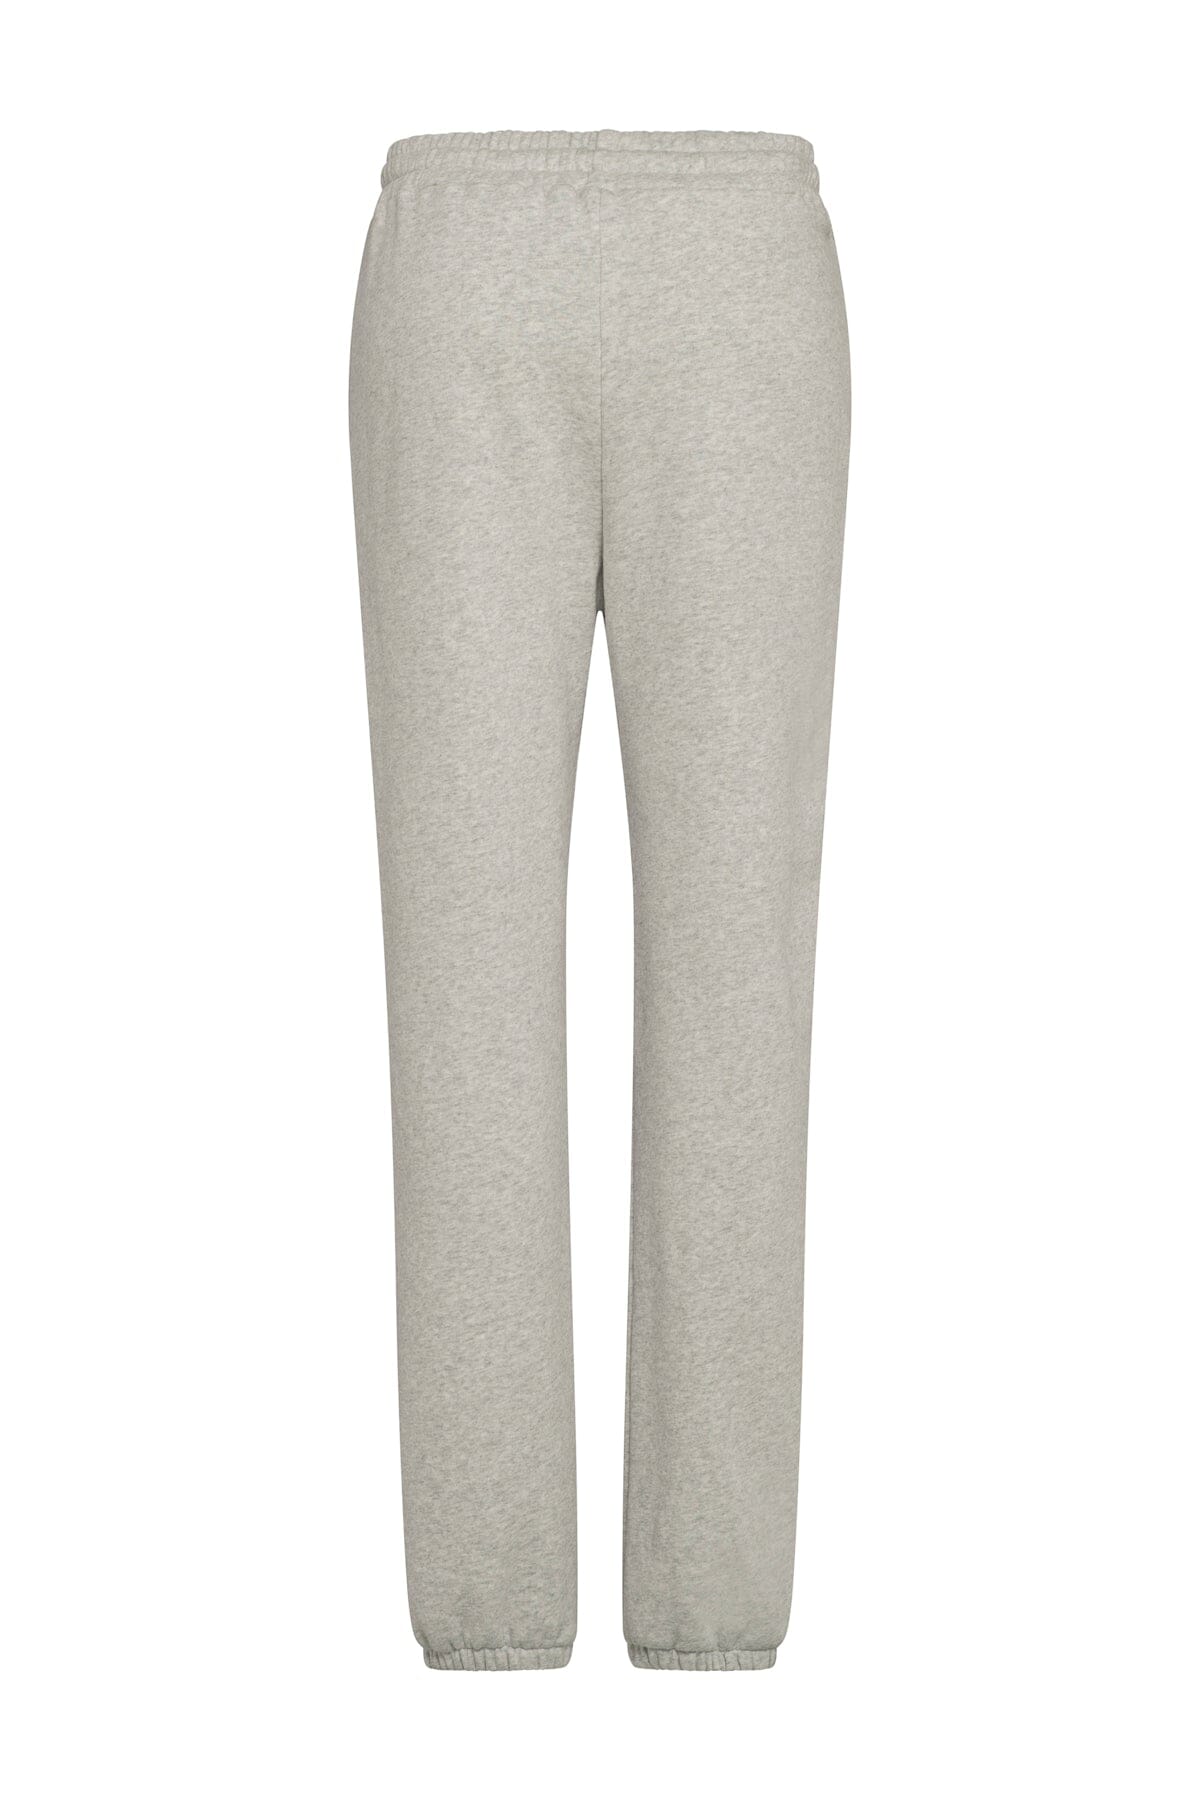 Paragon Aimee Pant Grey Melange Bukse